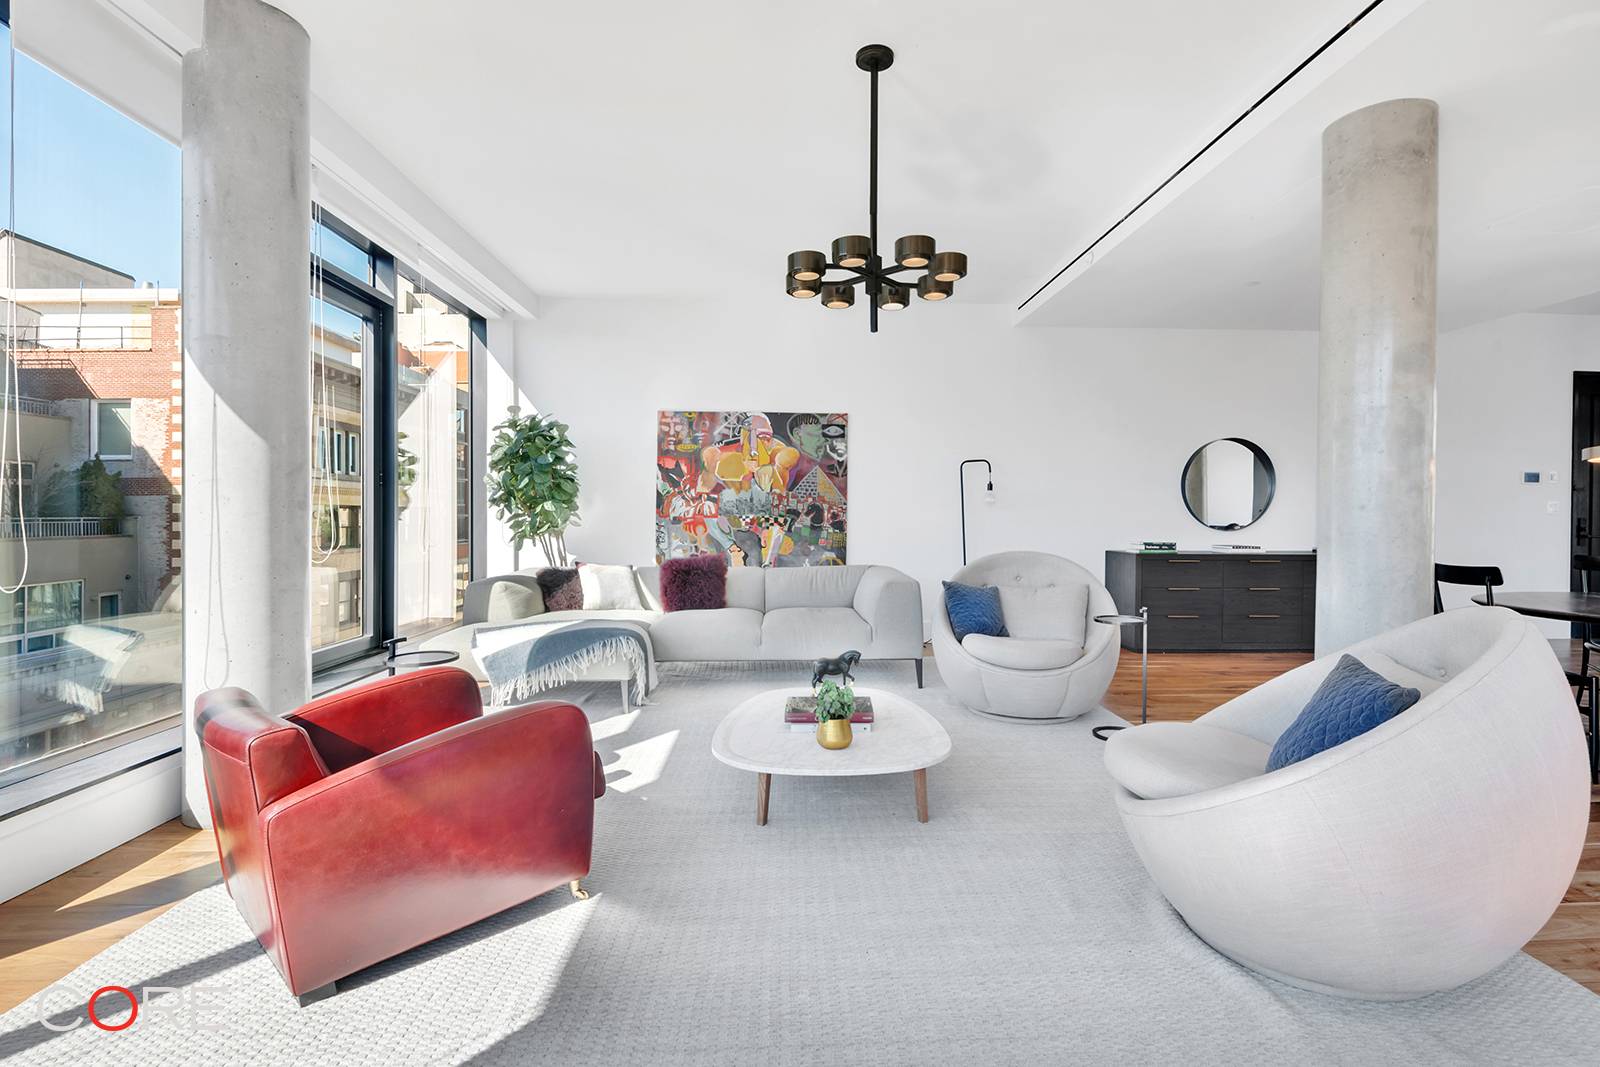 Live atop Chelsea's premier boutique condominium in this duplex penthouse offering seamless indoor outdoor living.